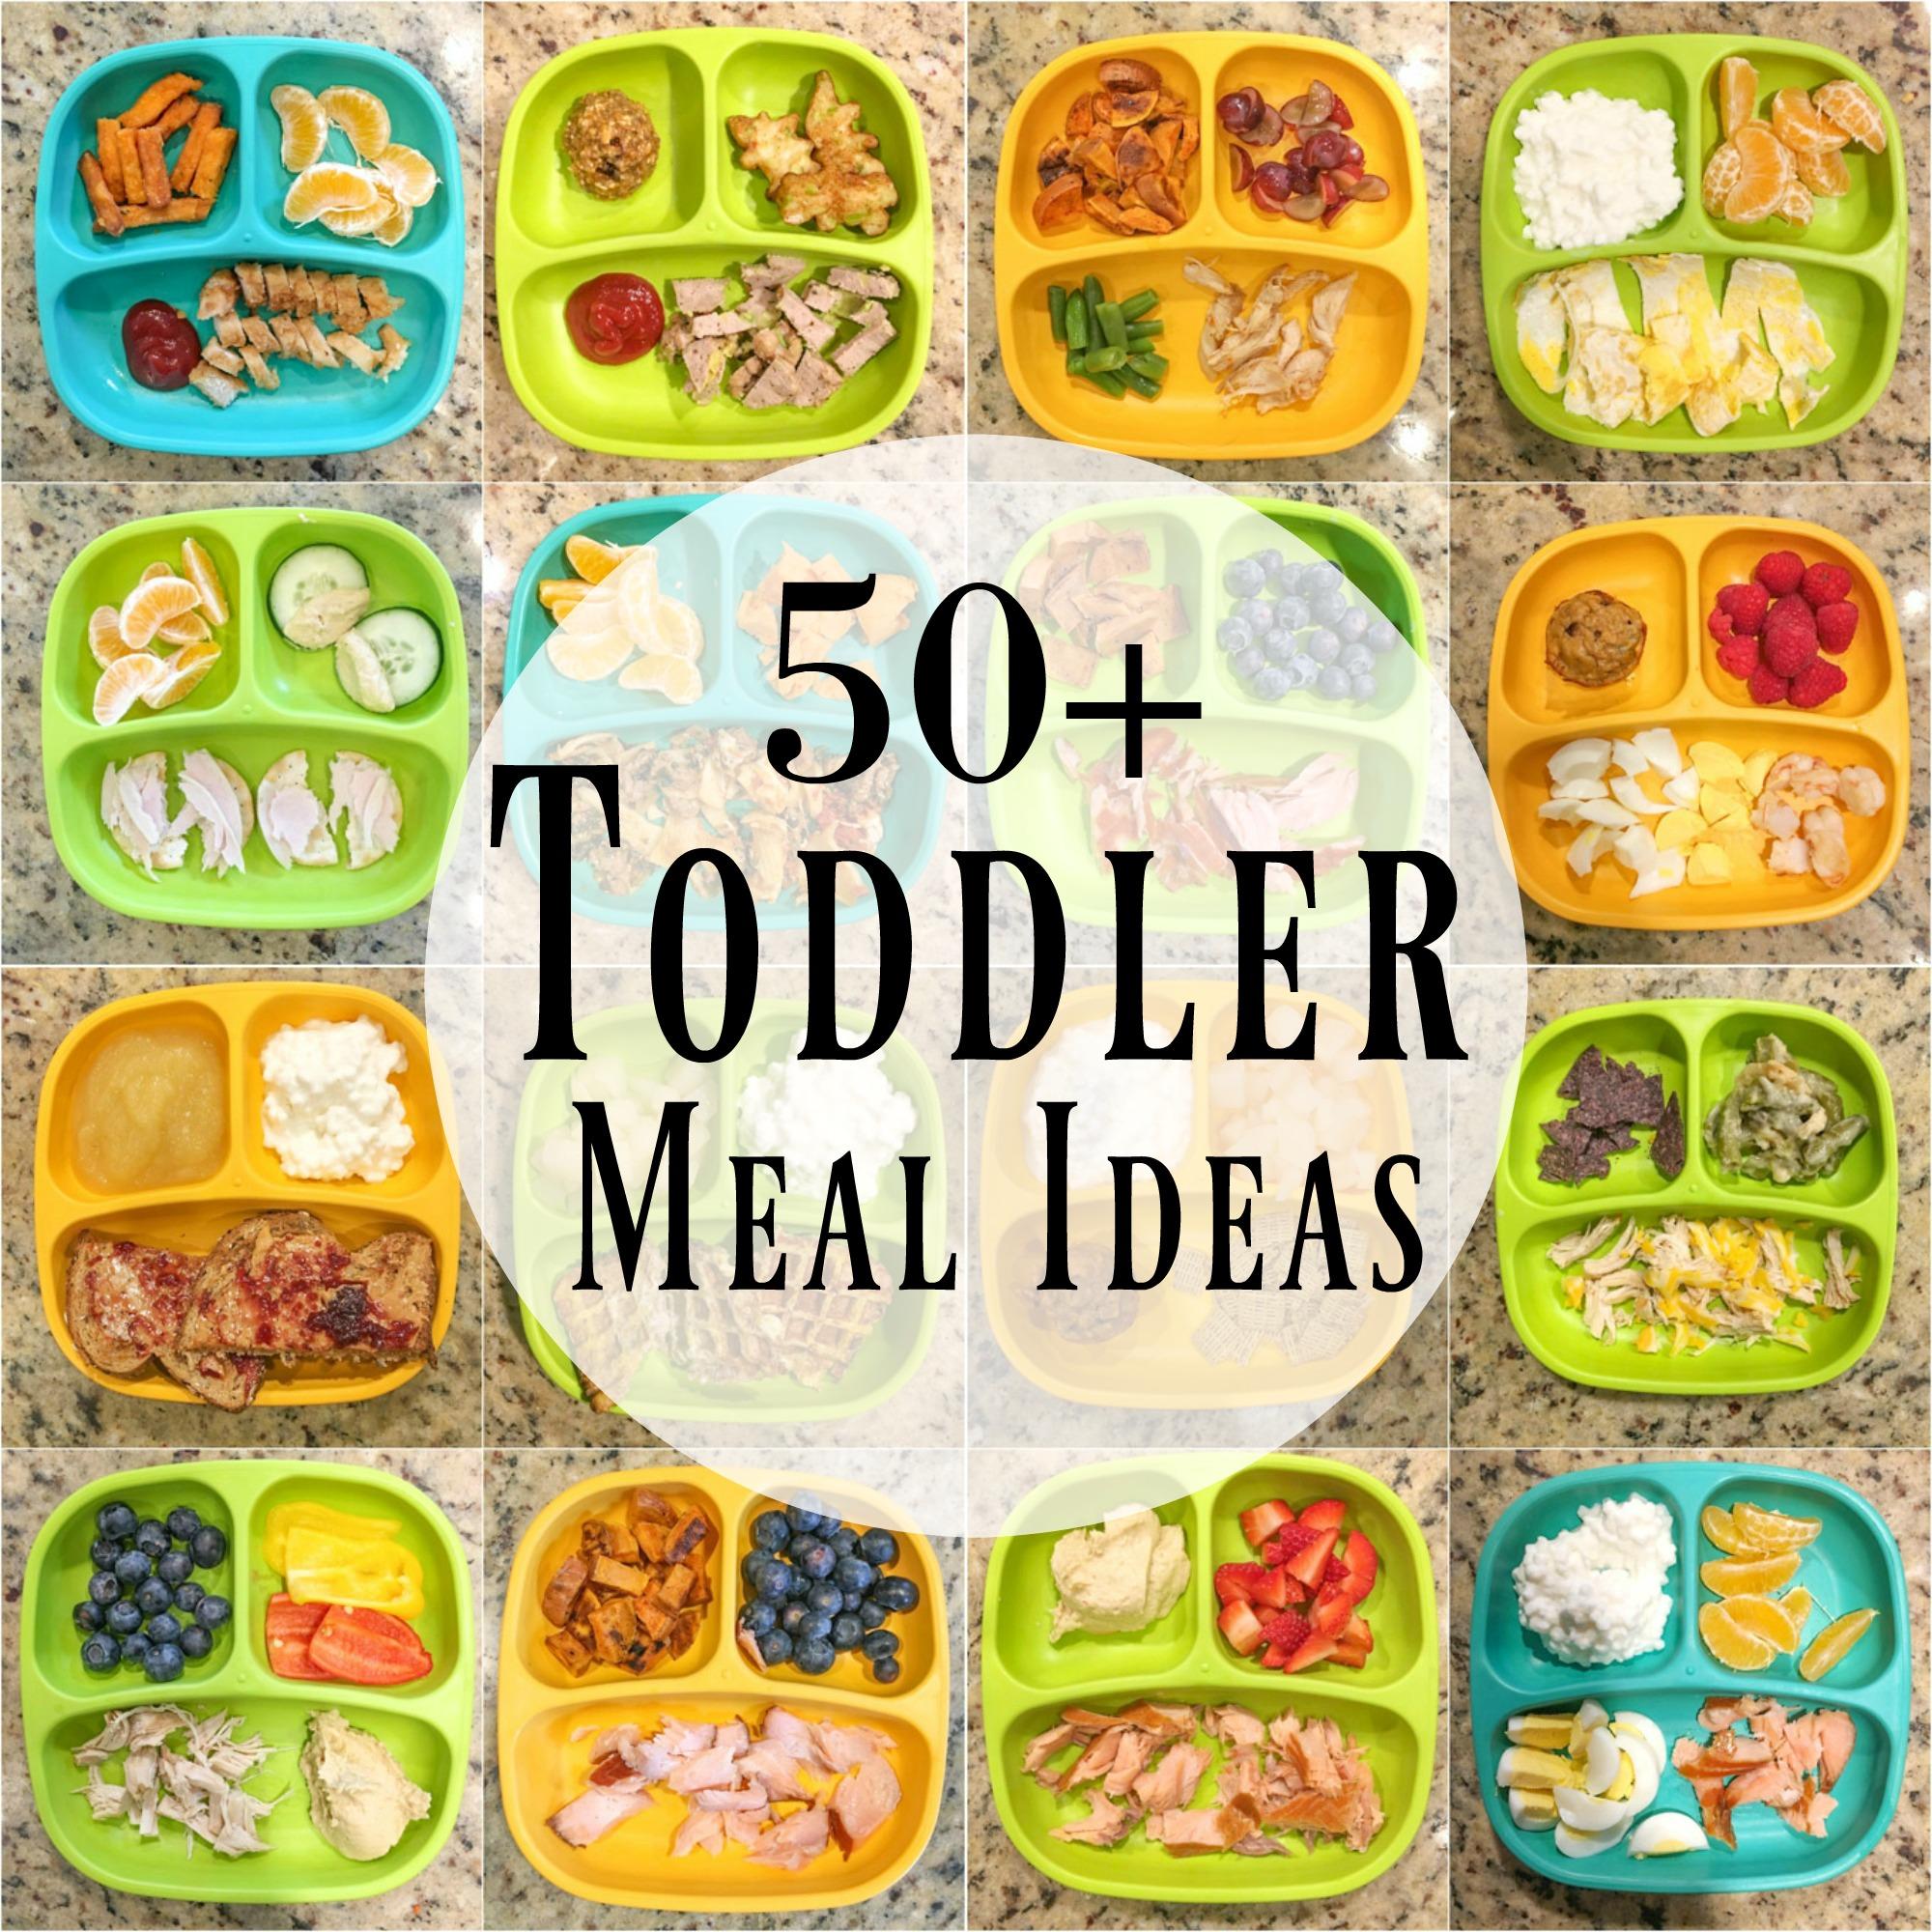 50 healthy toddler meal ideas | the lean green bean